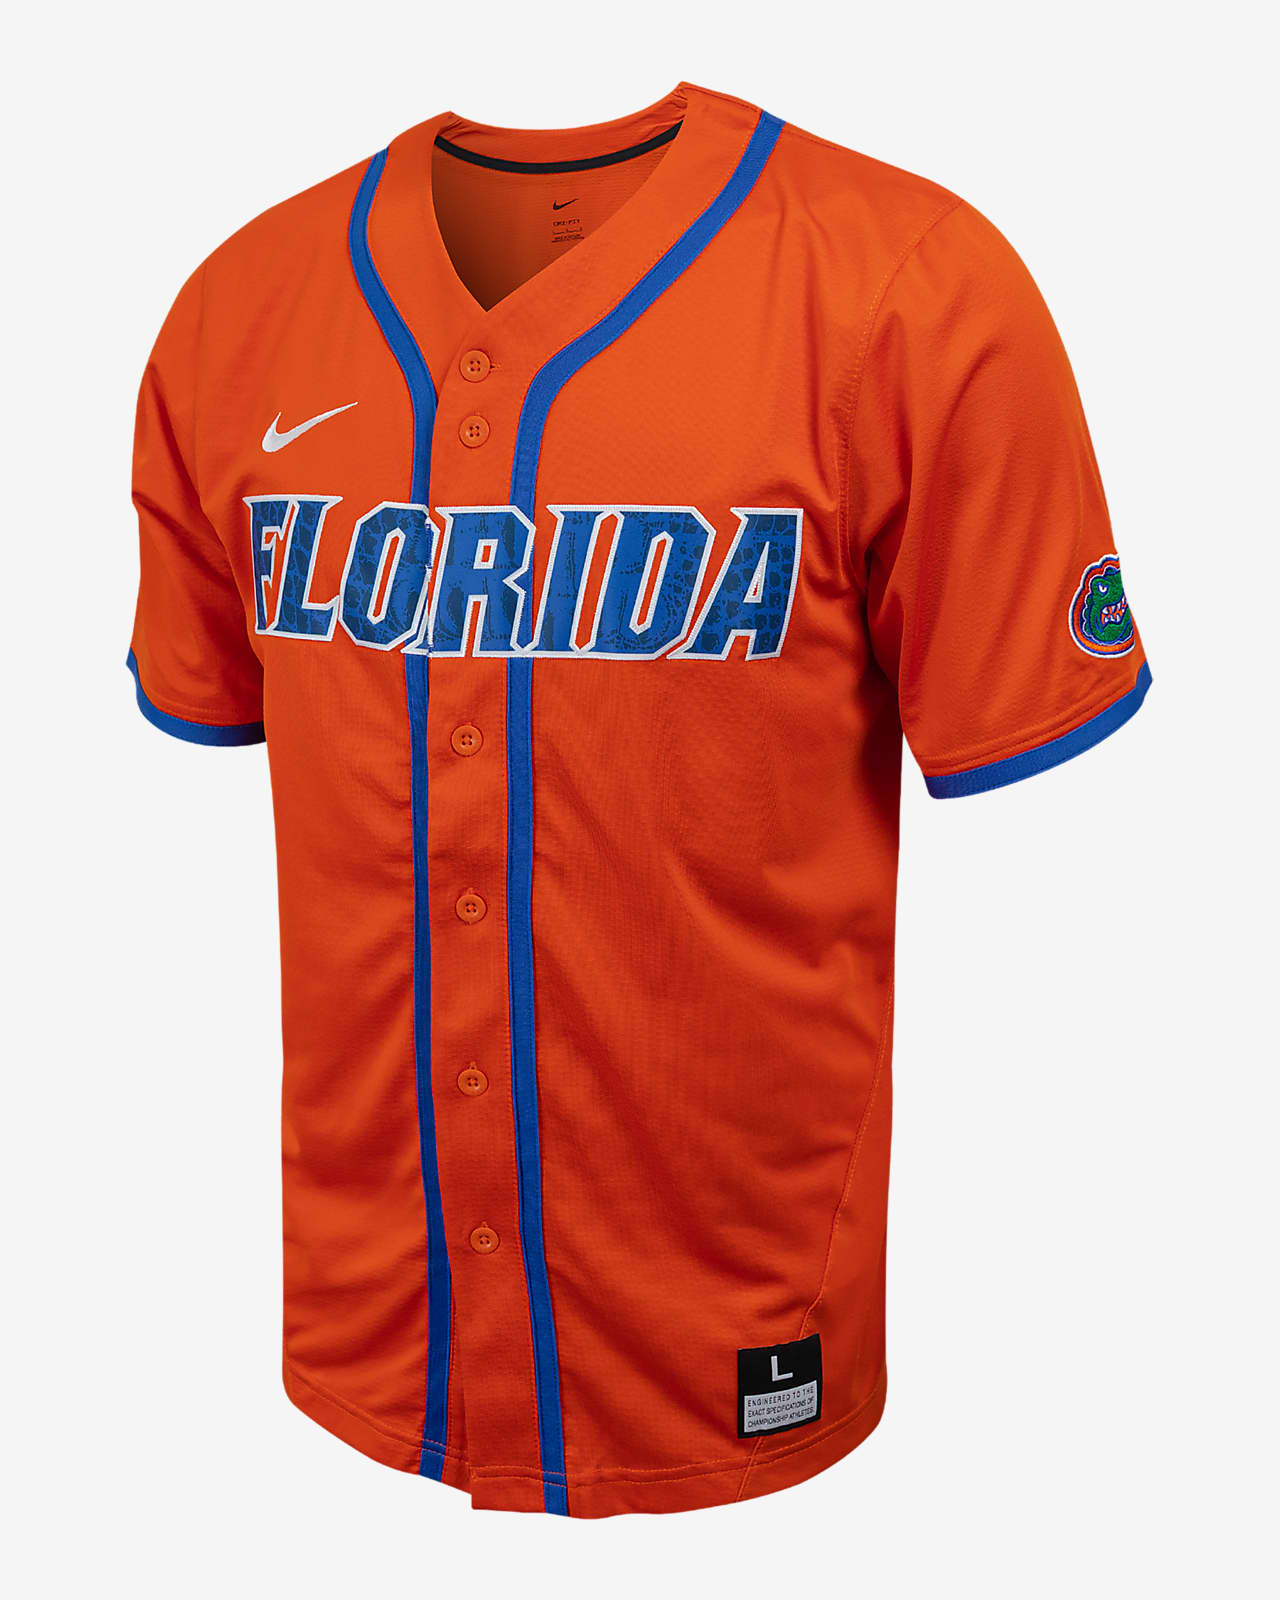 Florida Men's College Full-Button Baseball Jersey.